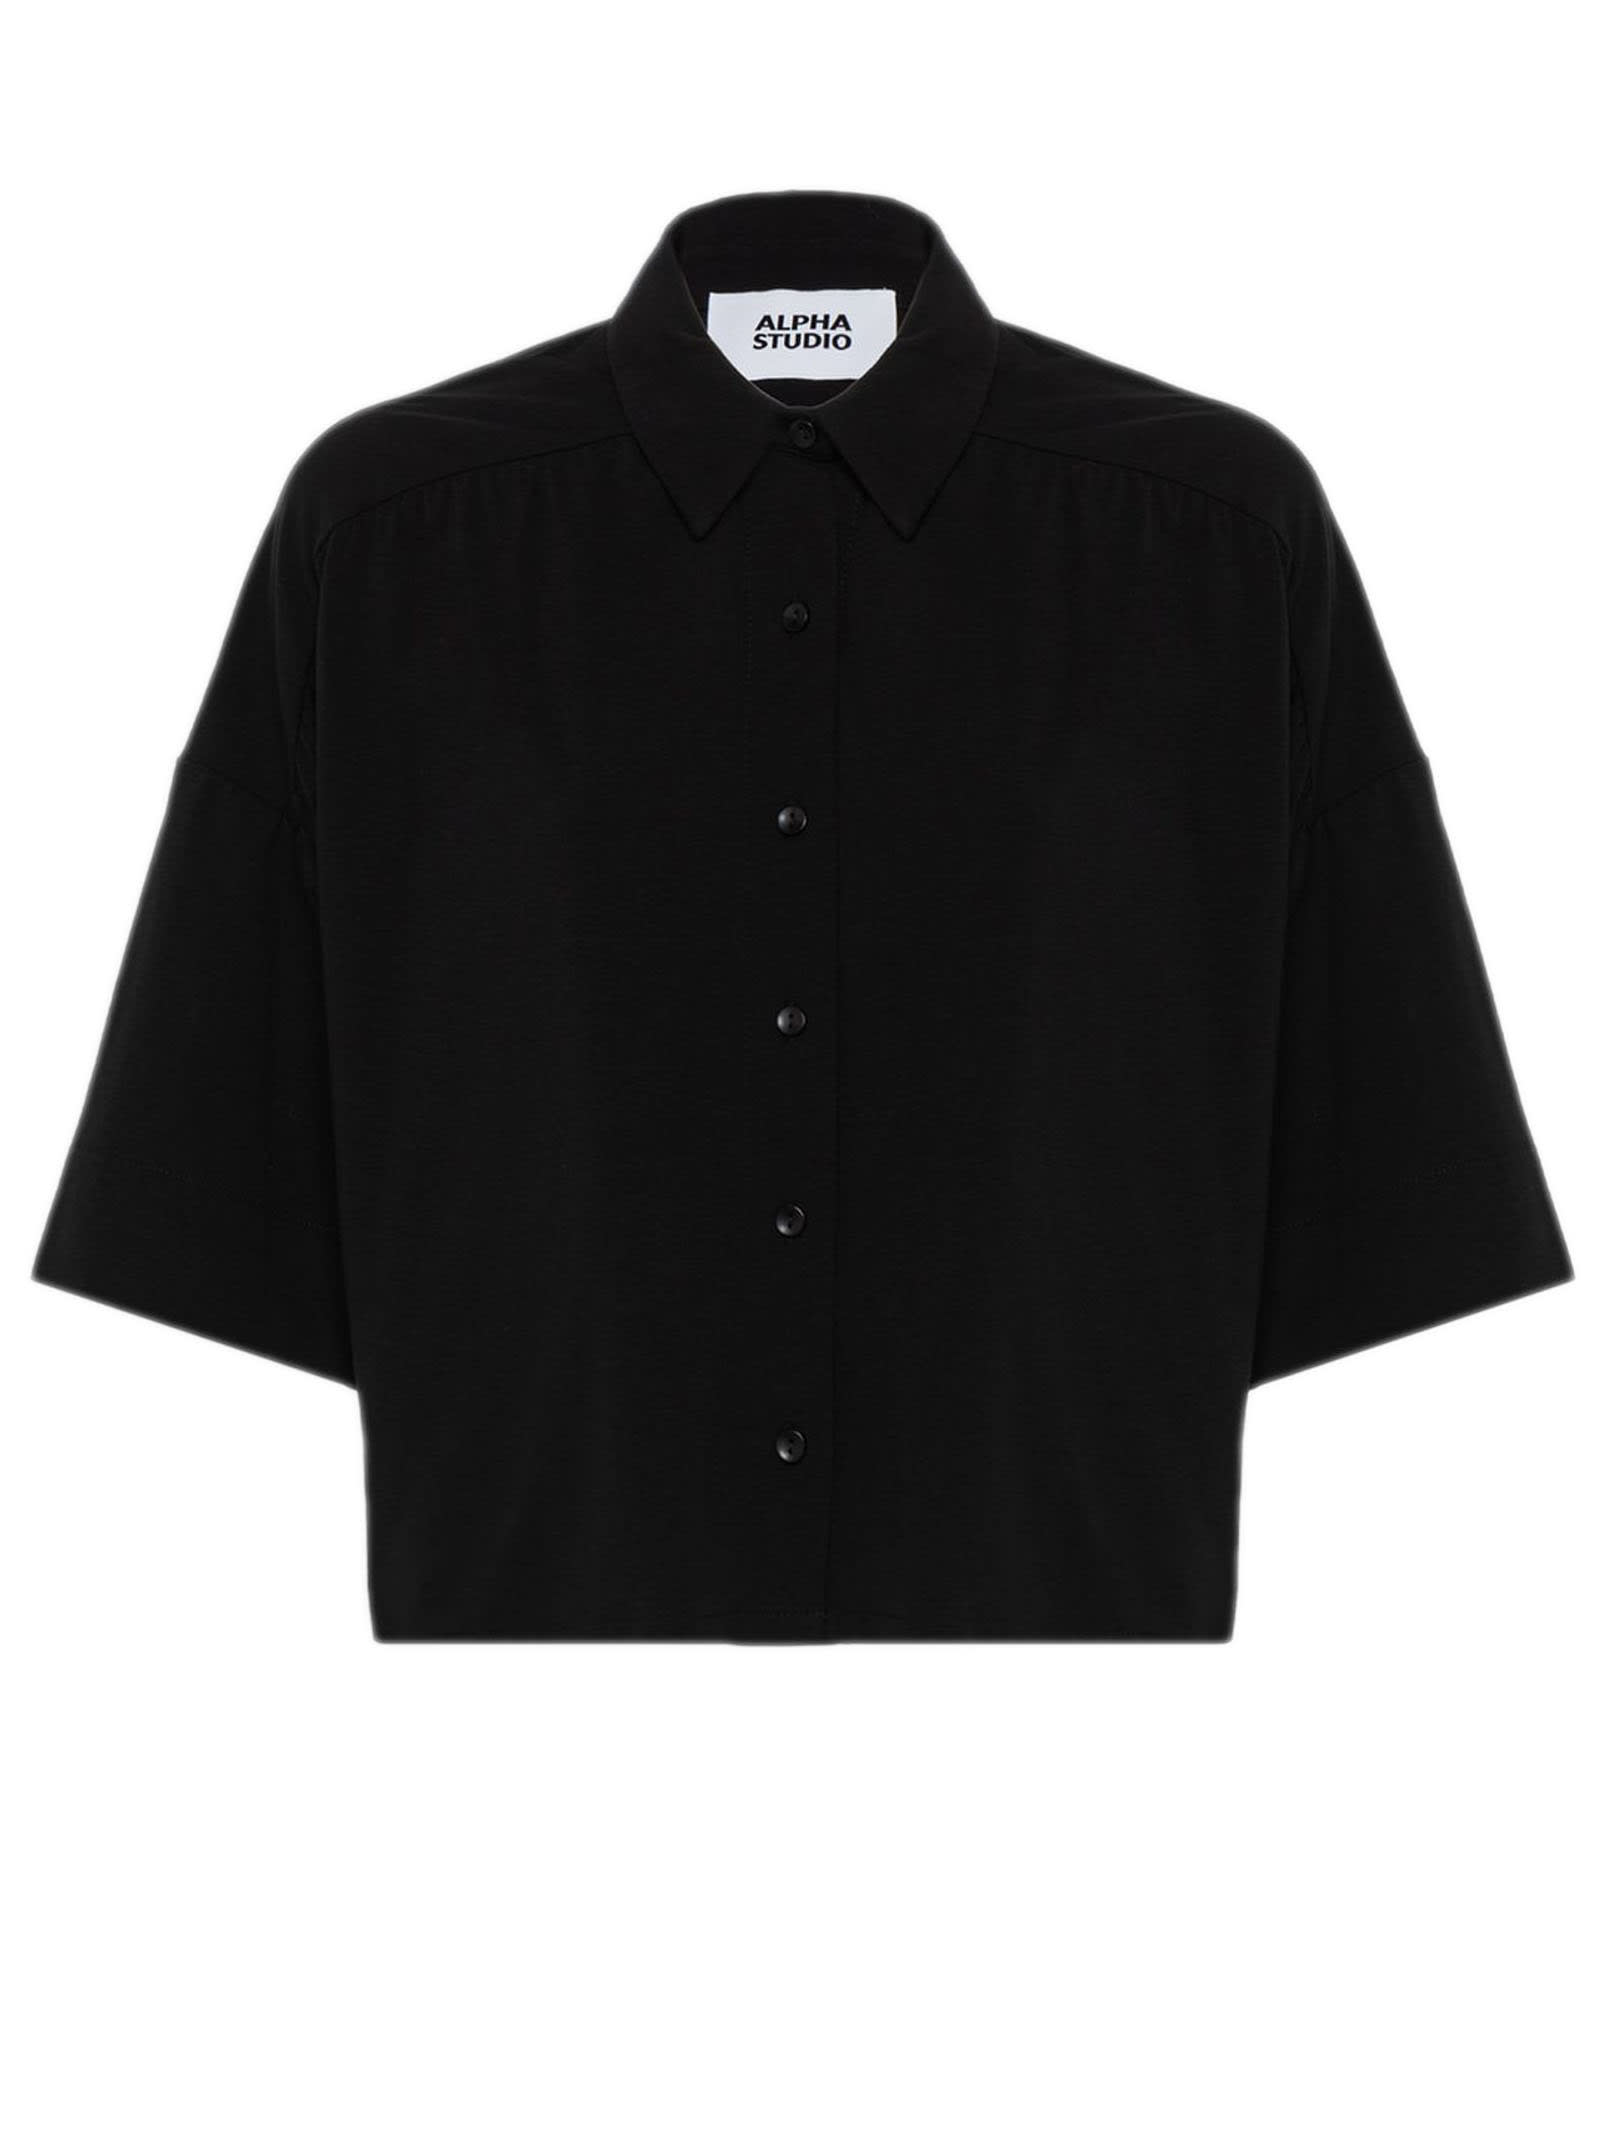 Alpha Studio Solid Colour Cotton Jersey Short Shirt In Black